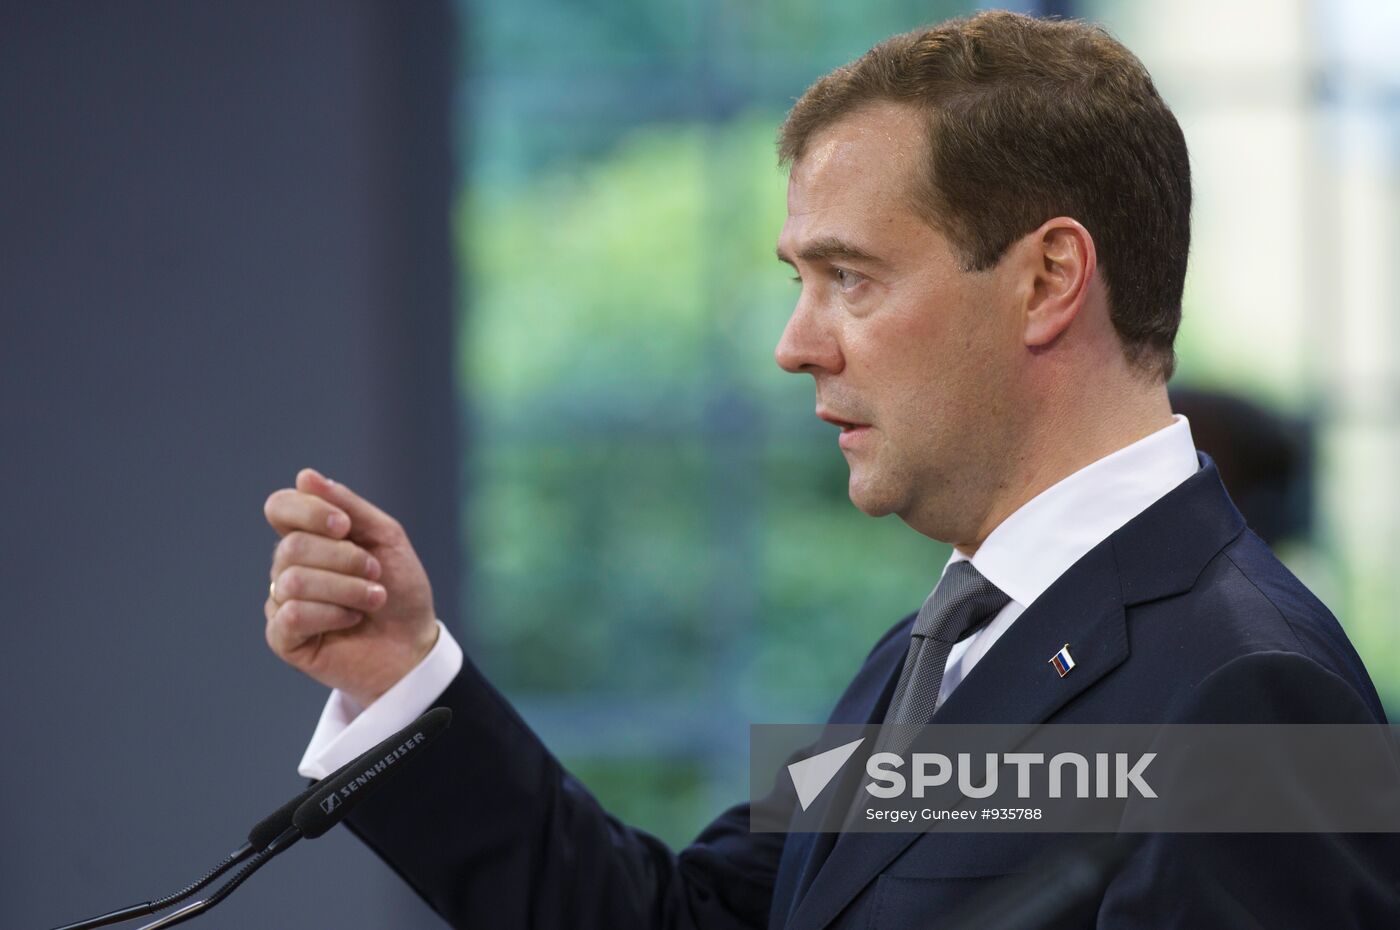 Dmitry Medvedev's visit to Hanover. Day two